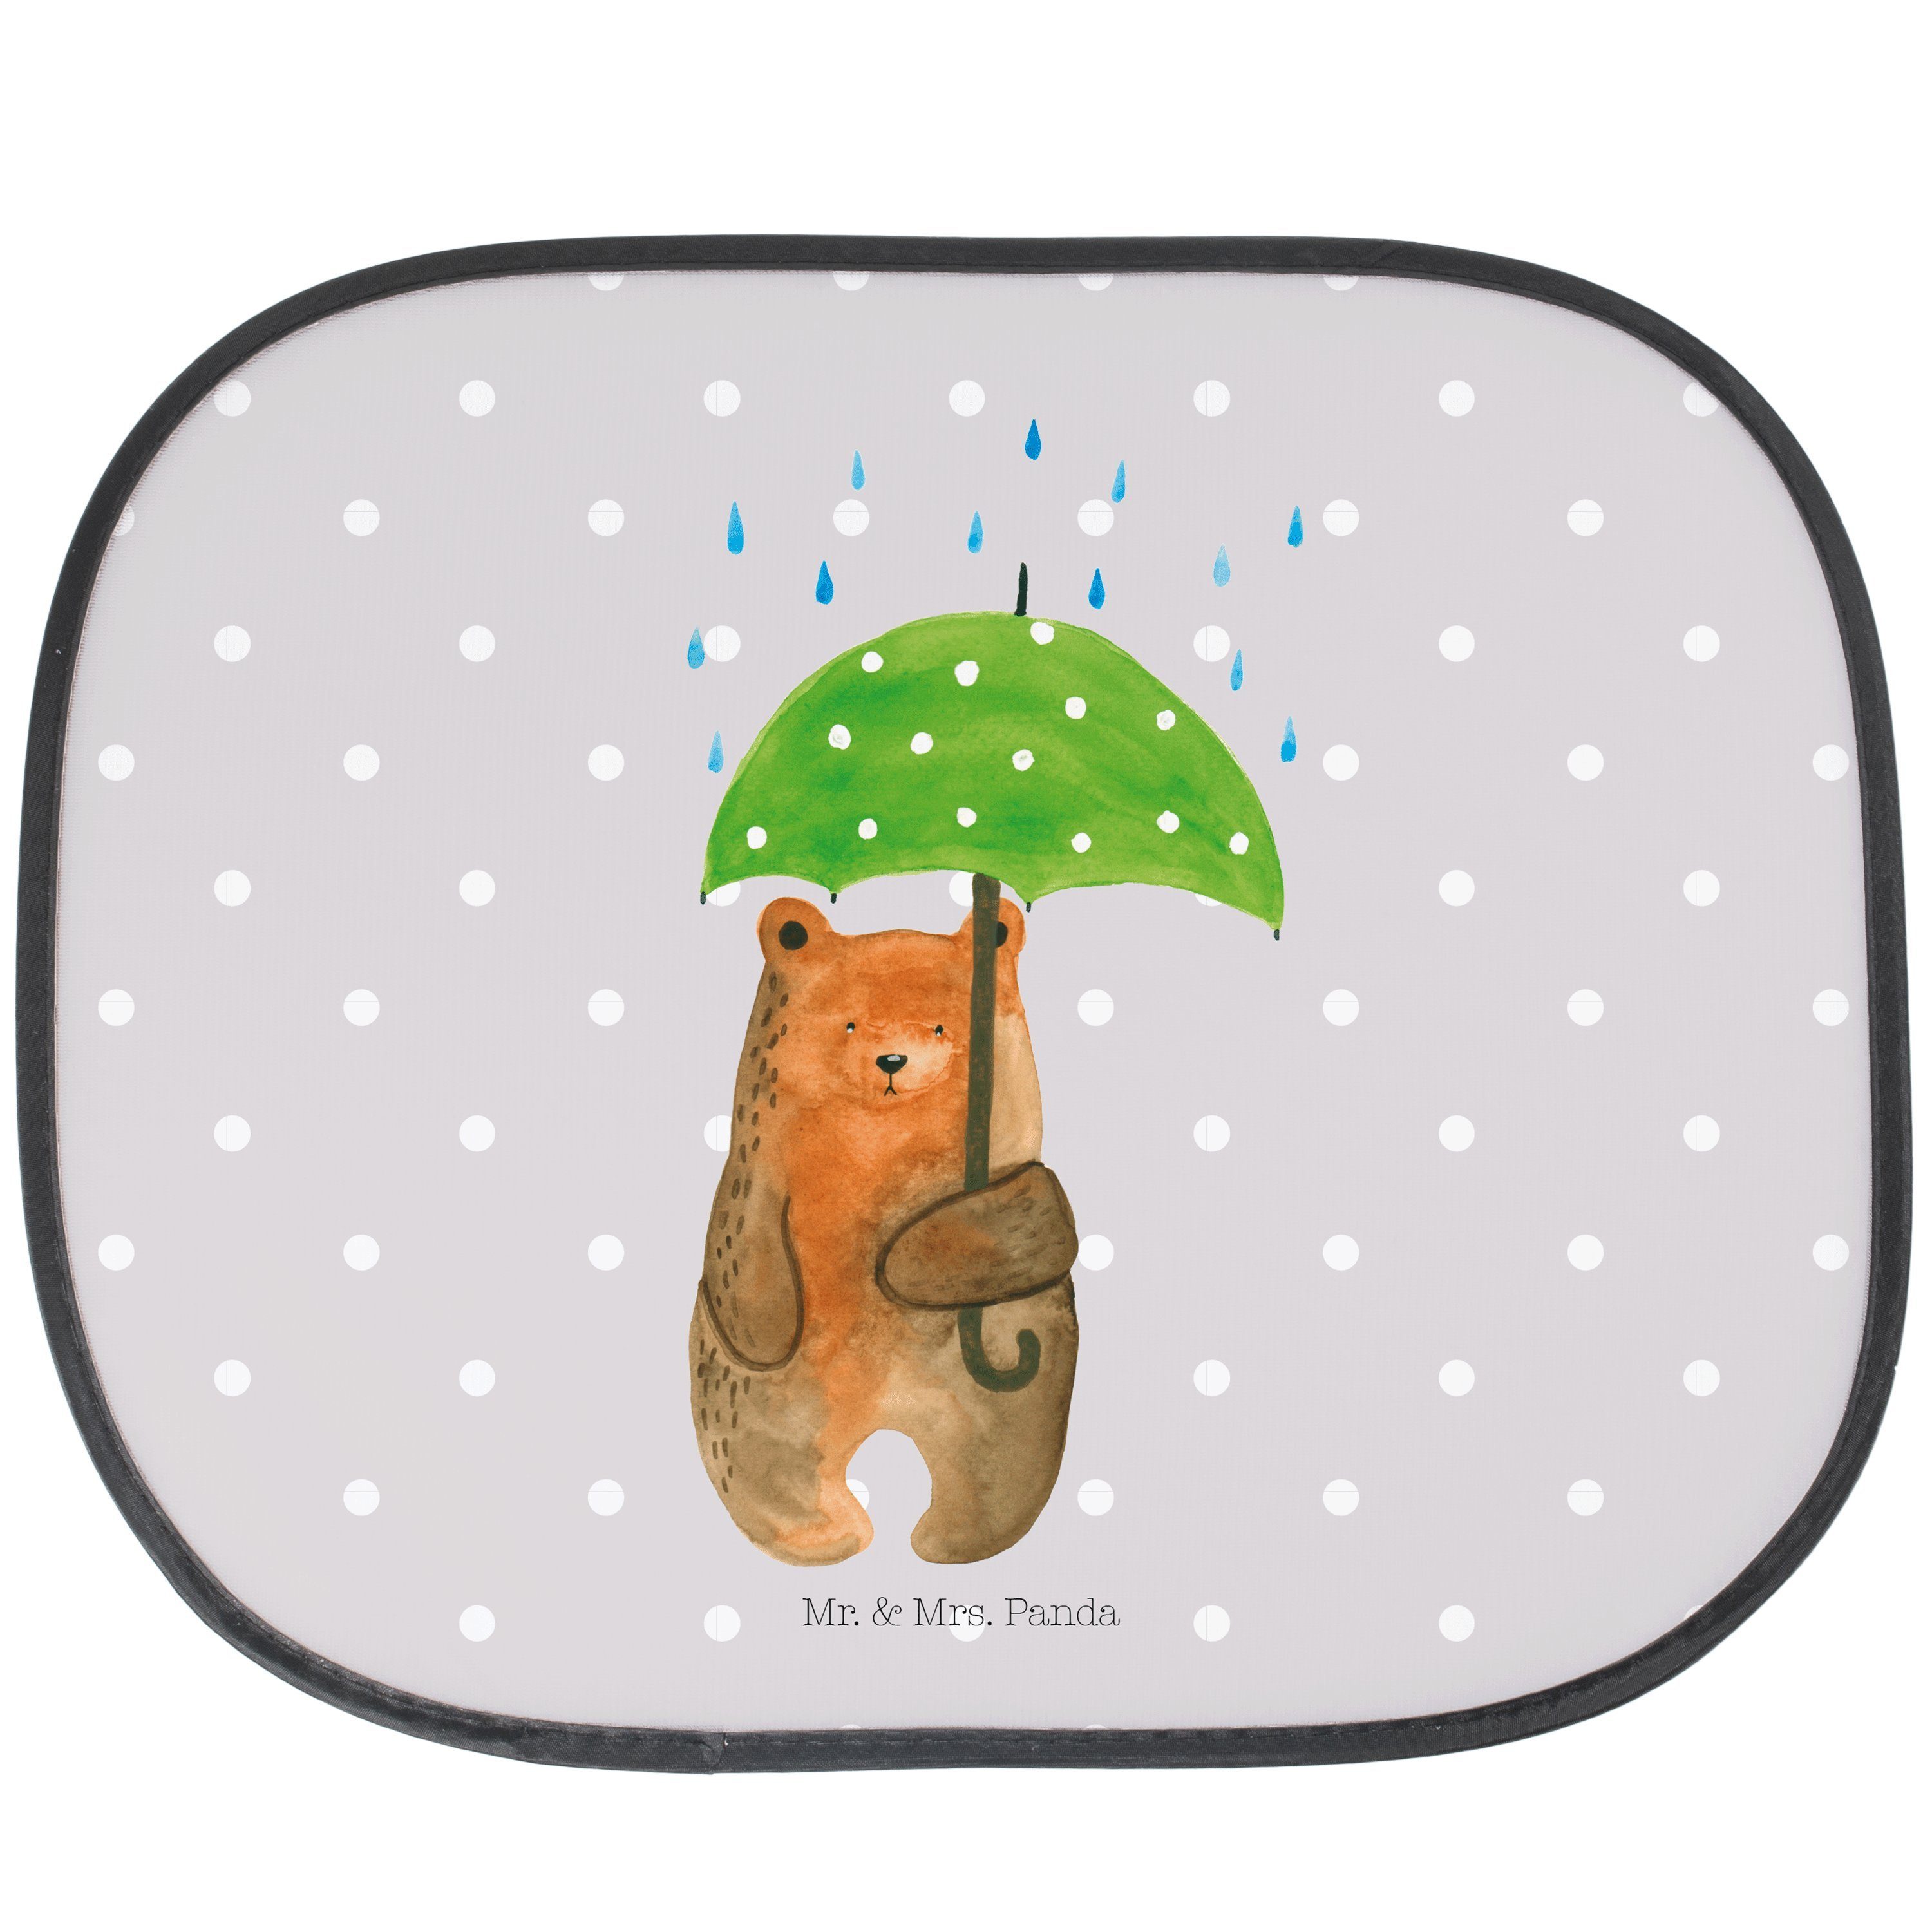 Sonnenschutz Bär mit Regenschirm - Grau Pastell - Geschenk, Sonnenschutzfolie, Par, Mr. & Mrs. Panda, Seidenmatt